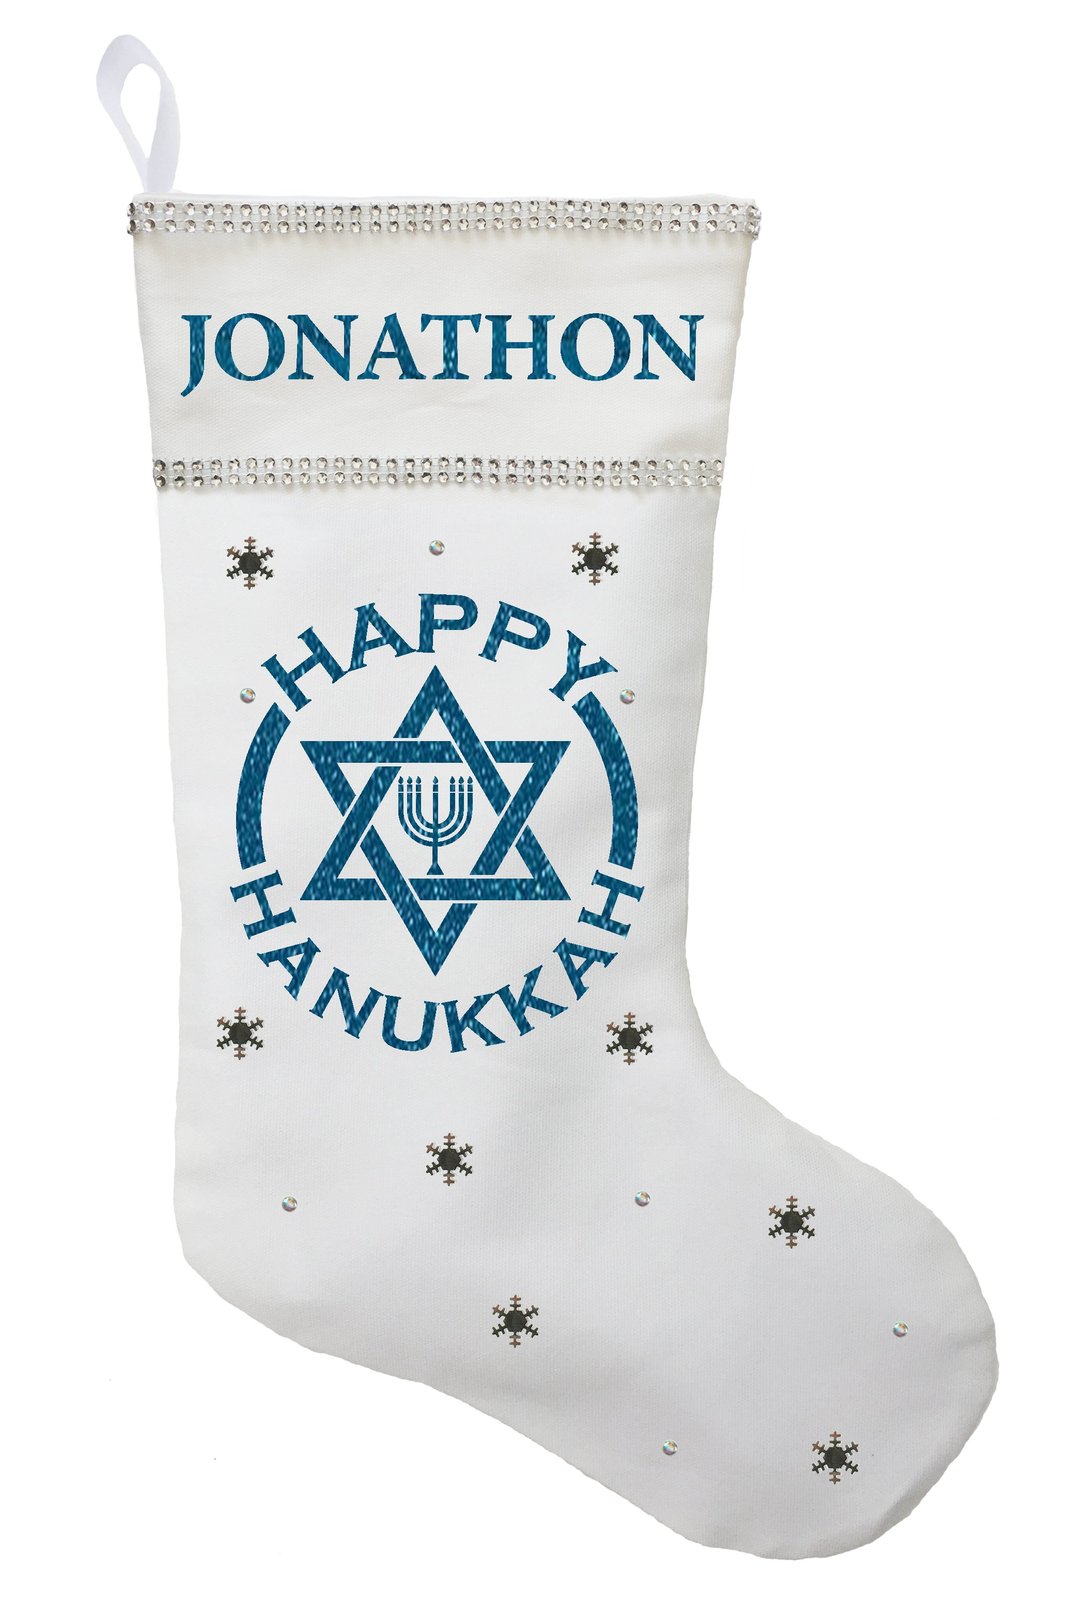 Happy Hanukkah Stocking - Personalized and Hand Made Hanukkah Stocking - $33.00